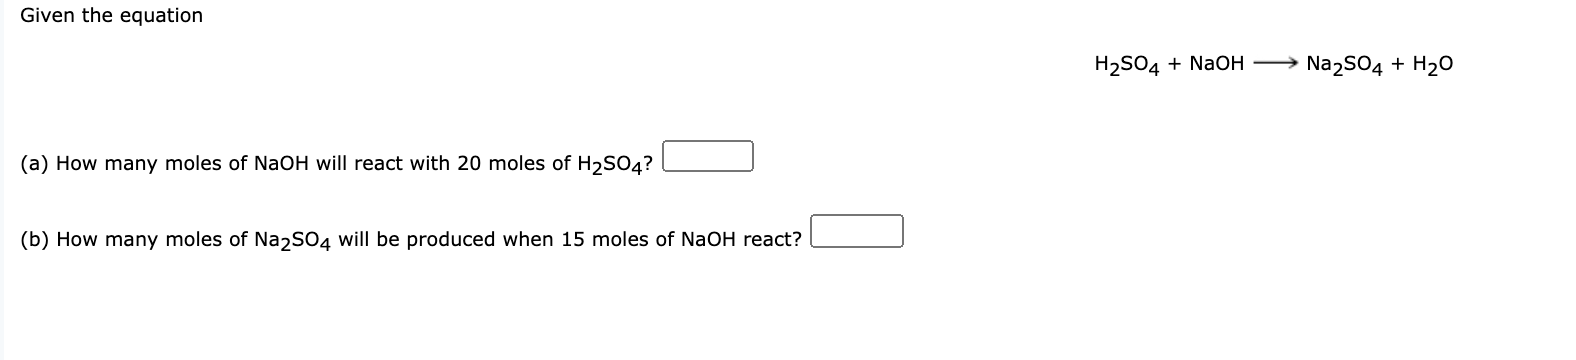 Given the equation
H2SO4 + NaoH
→ Na2SO4 + H20
(a) How many moles of NaOH will react with 20 moles of H2SO4?
(b) How many moles of Na2s04 will be produced when 15 moles of NaOH react?
